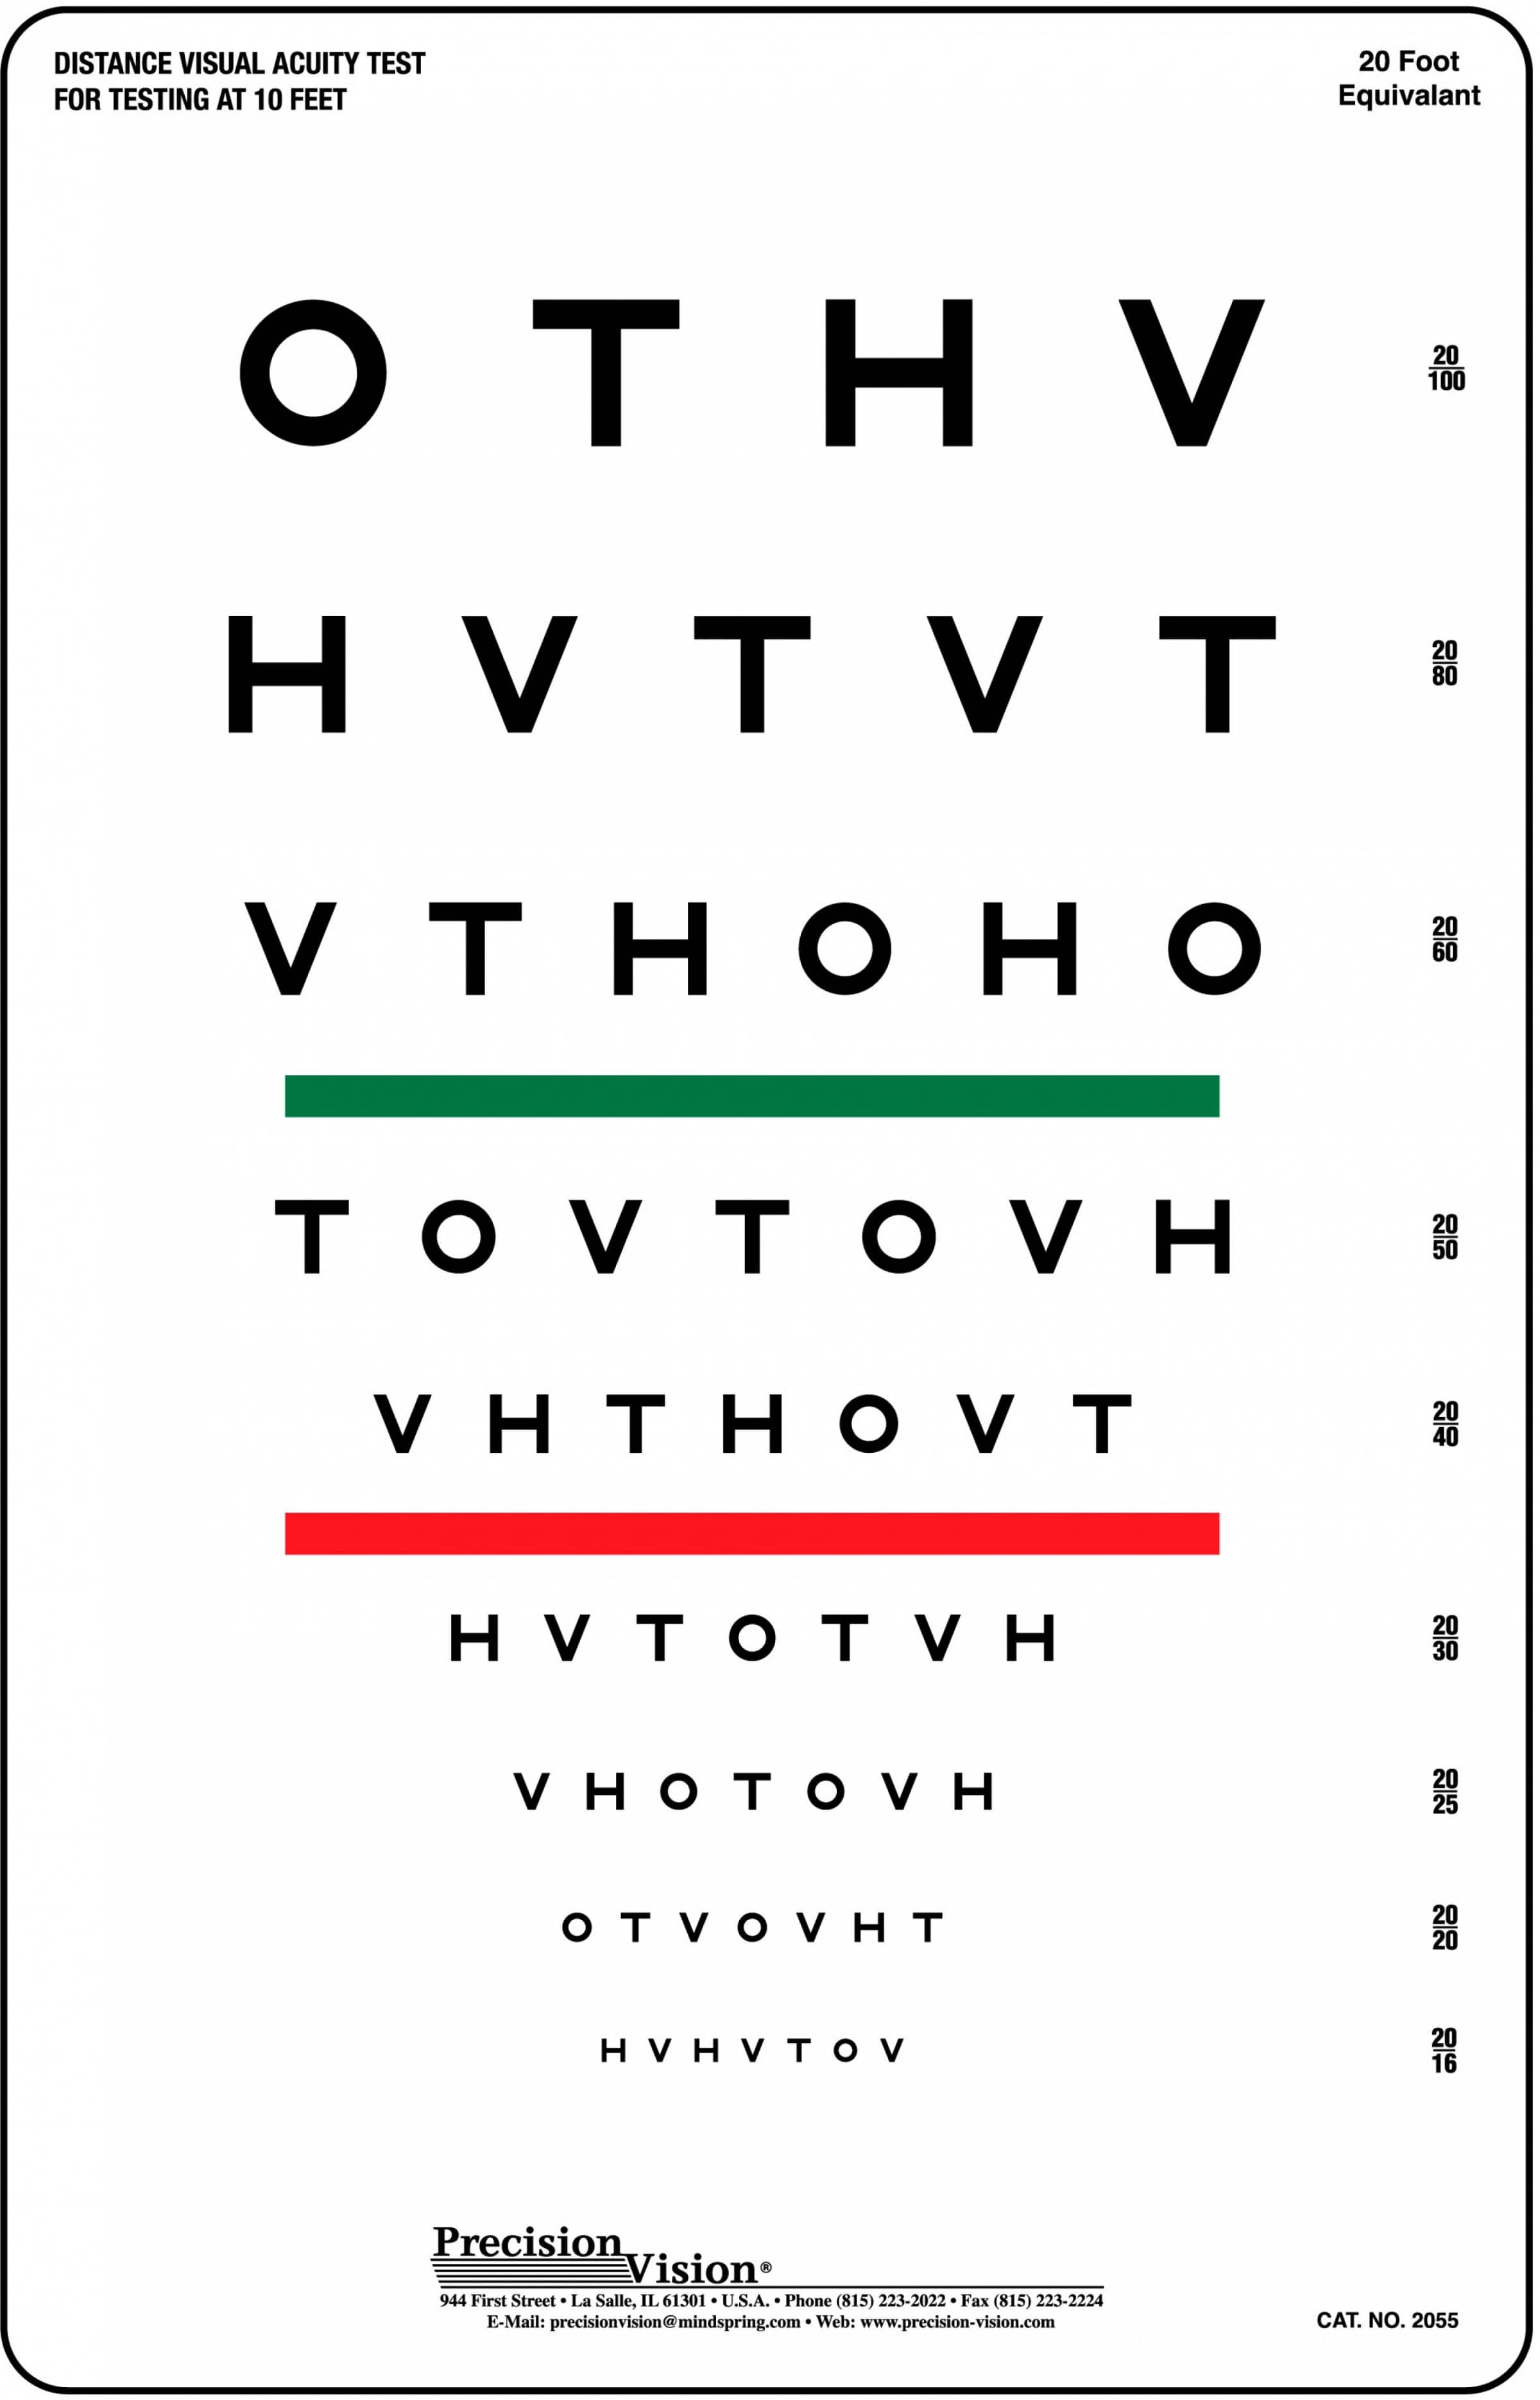 HOTV Red/Green Bar Vision Test Chart - Precision Vision